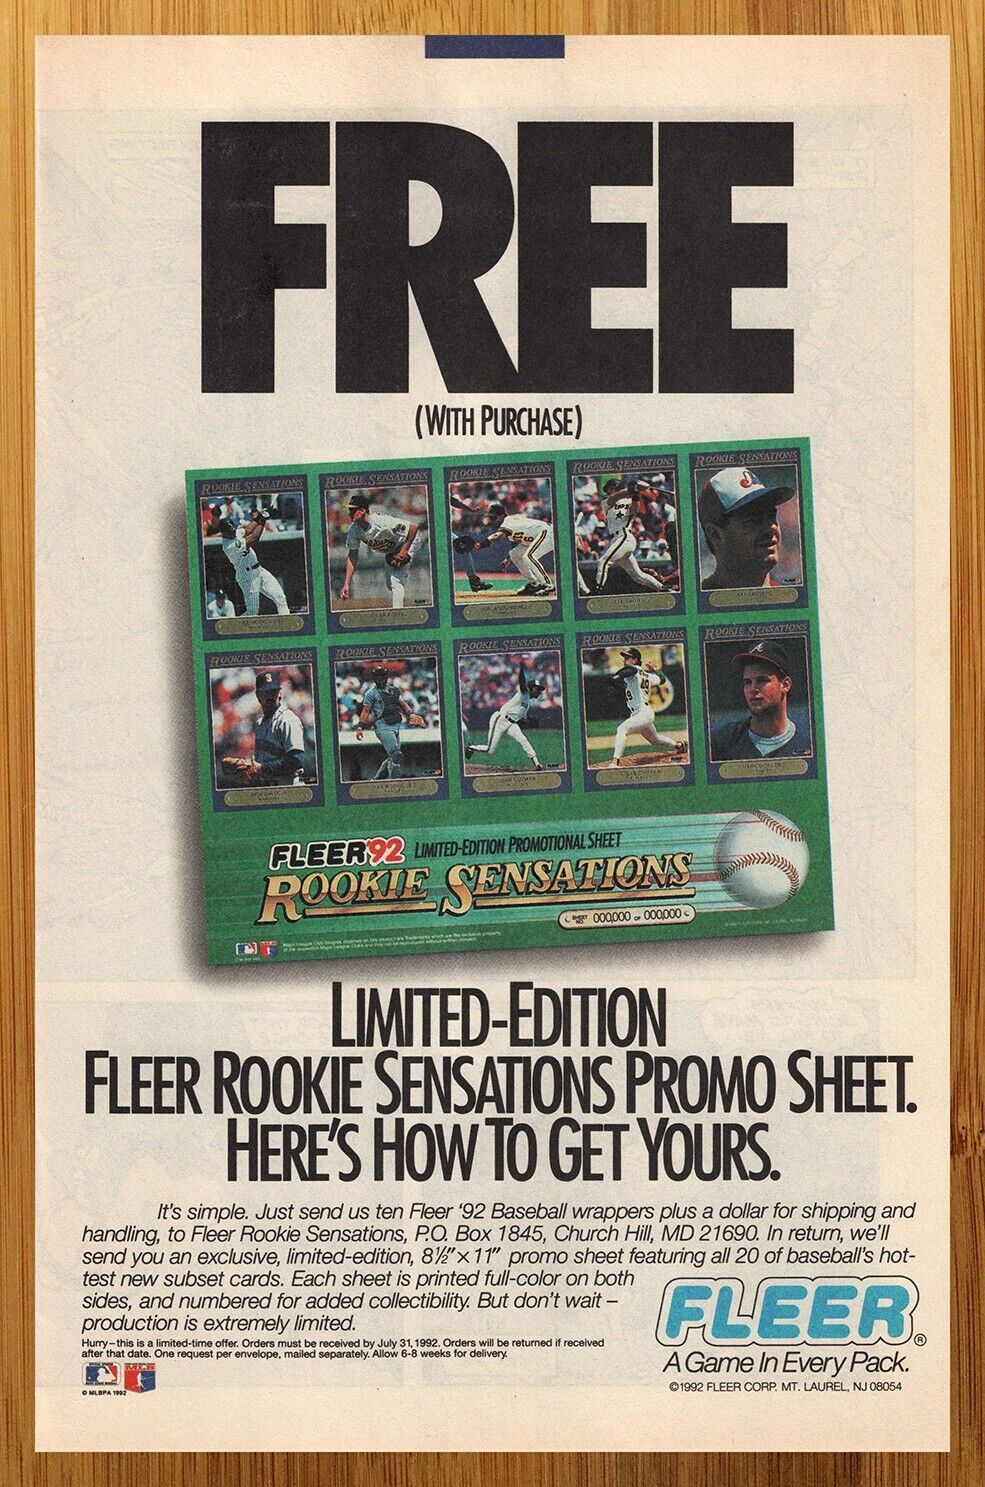 1992 Fleer Rookie Sensations Trading Cards Vintage Print Ad/Poster Baseball Art